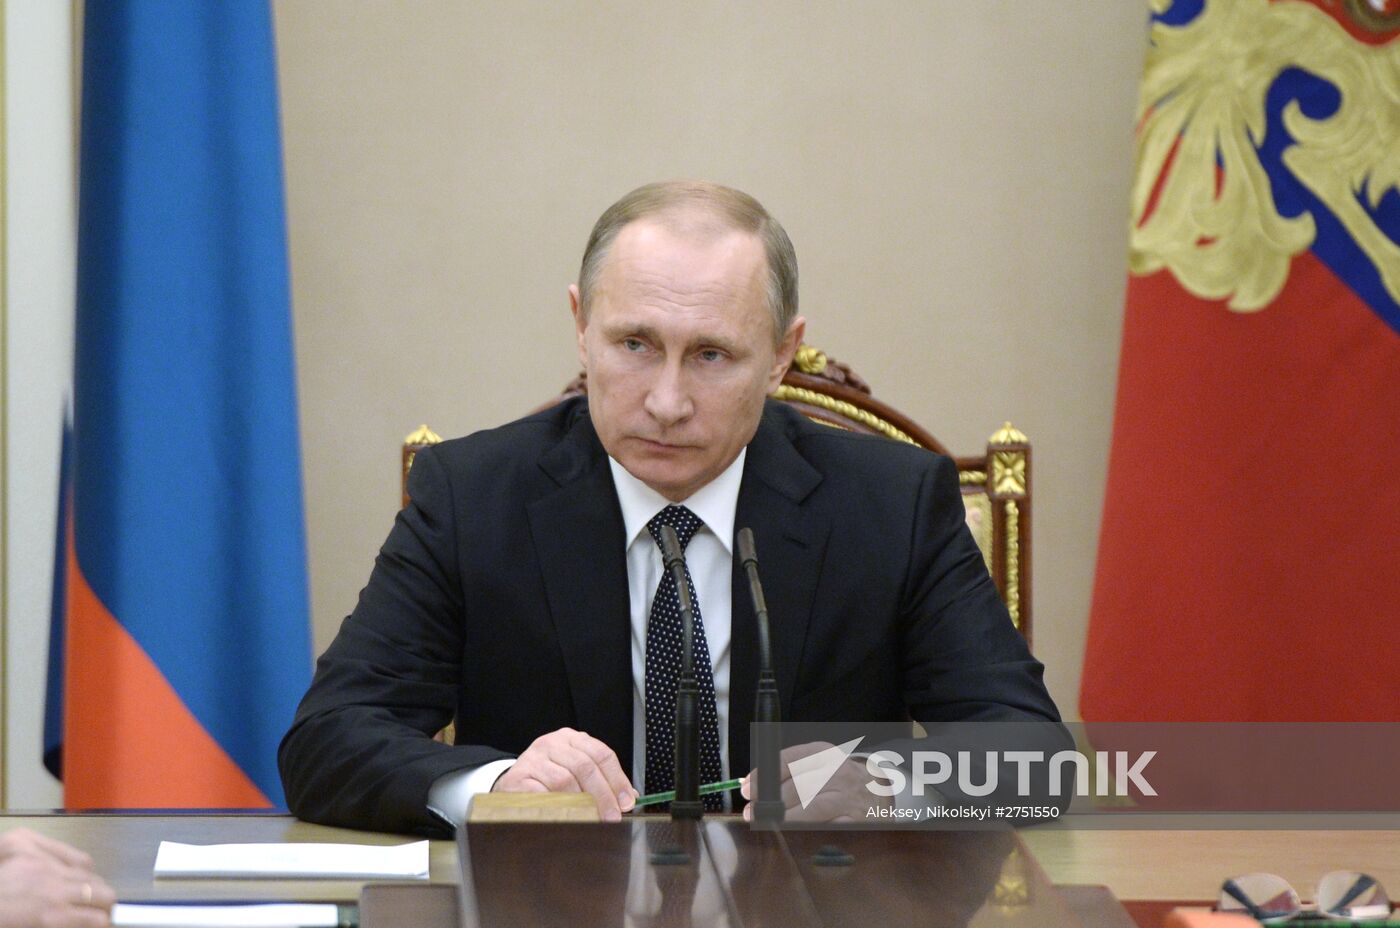 President Vladimir Putin chairs Secutiry Council meeting